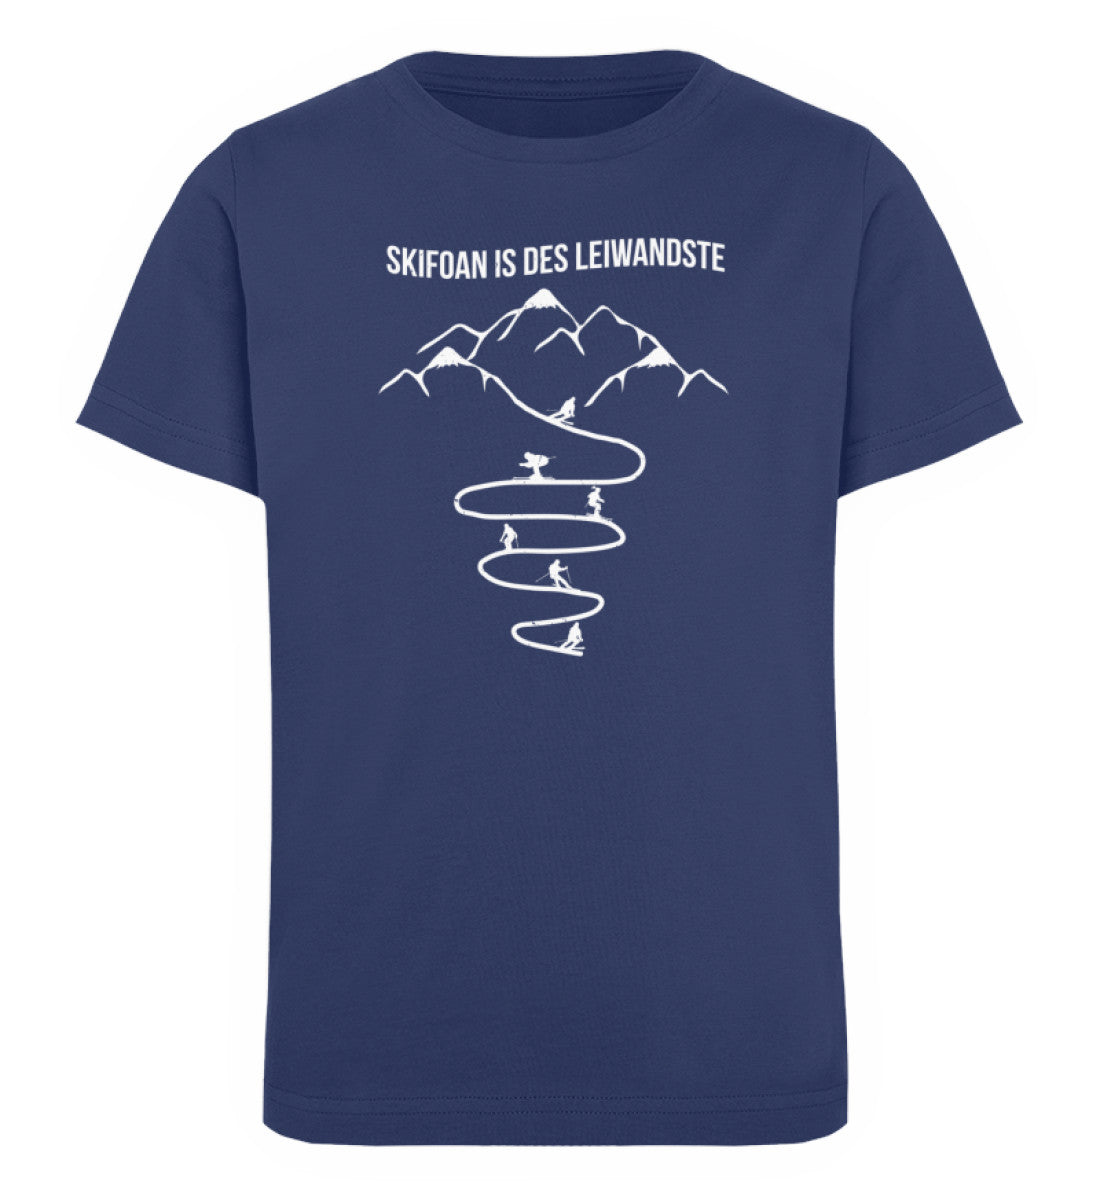 Skifoan is des leiwandste - Kinder Premium Organic T-Shirt Navyblau